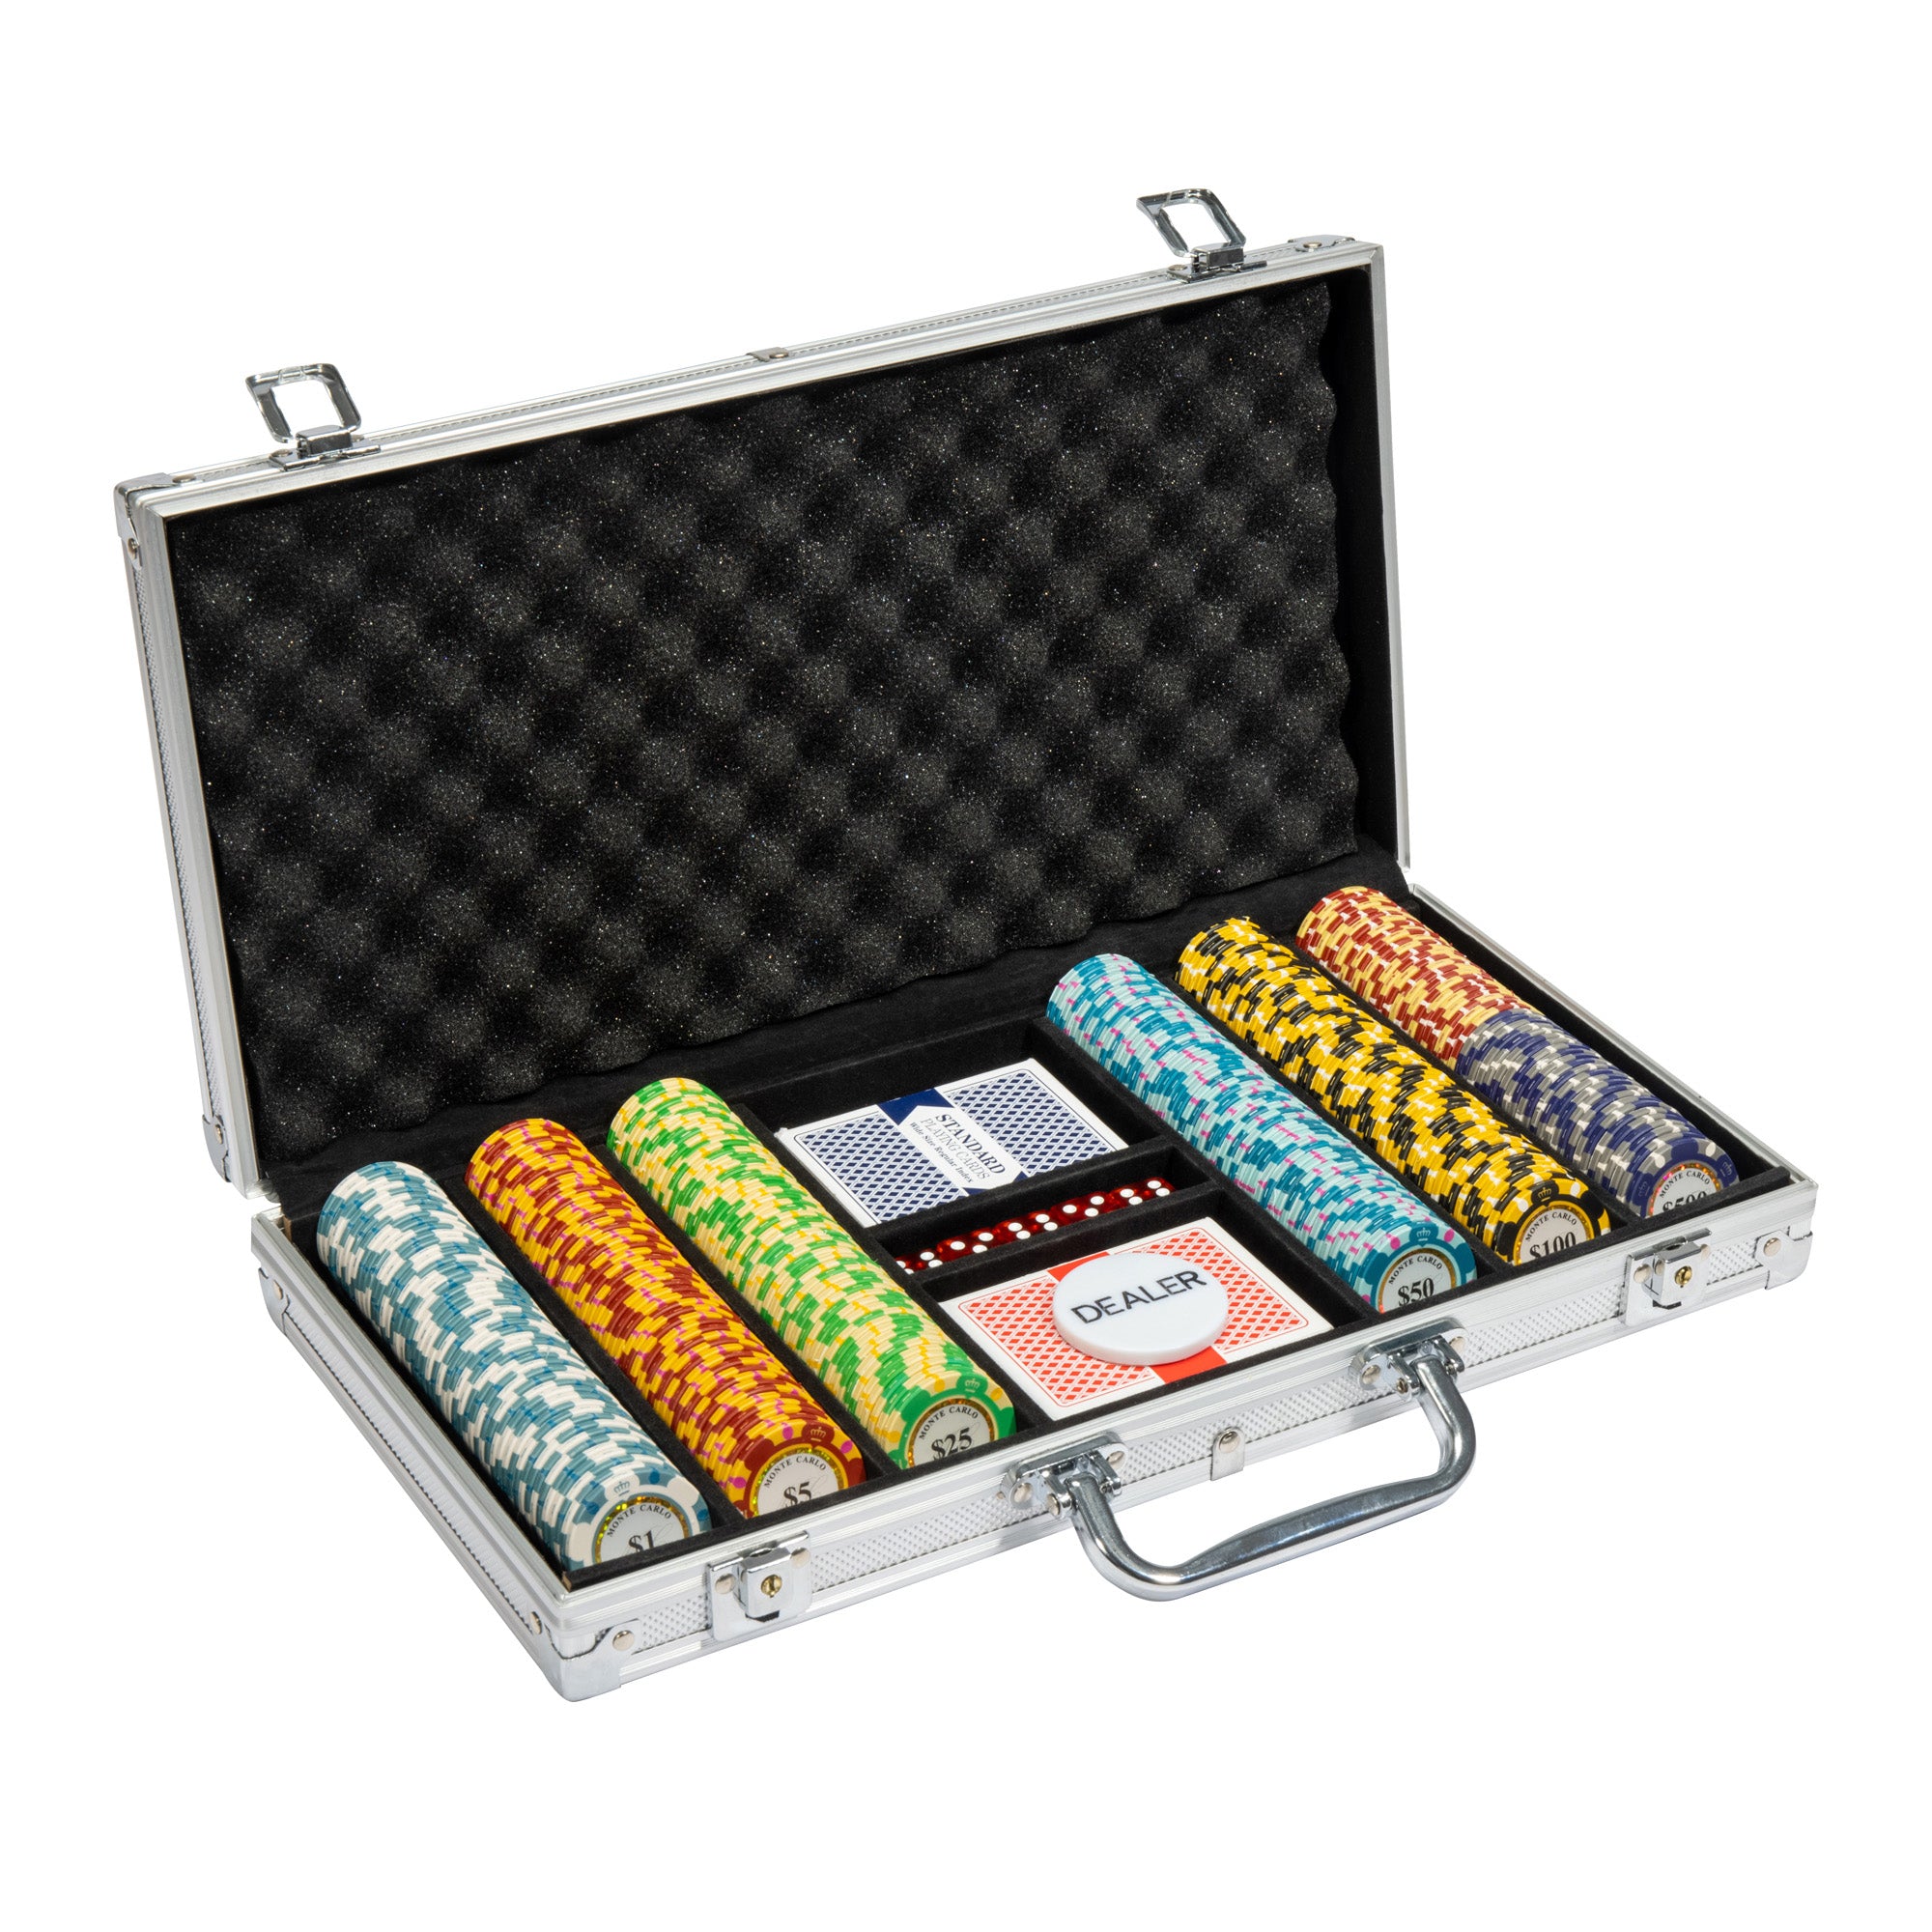 Monte Carlo 14-gram Poker Chip Set in Aluminum Case (300 Count) - Clay Composite